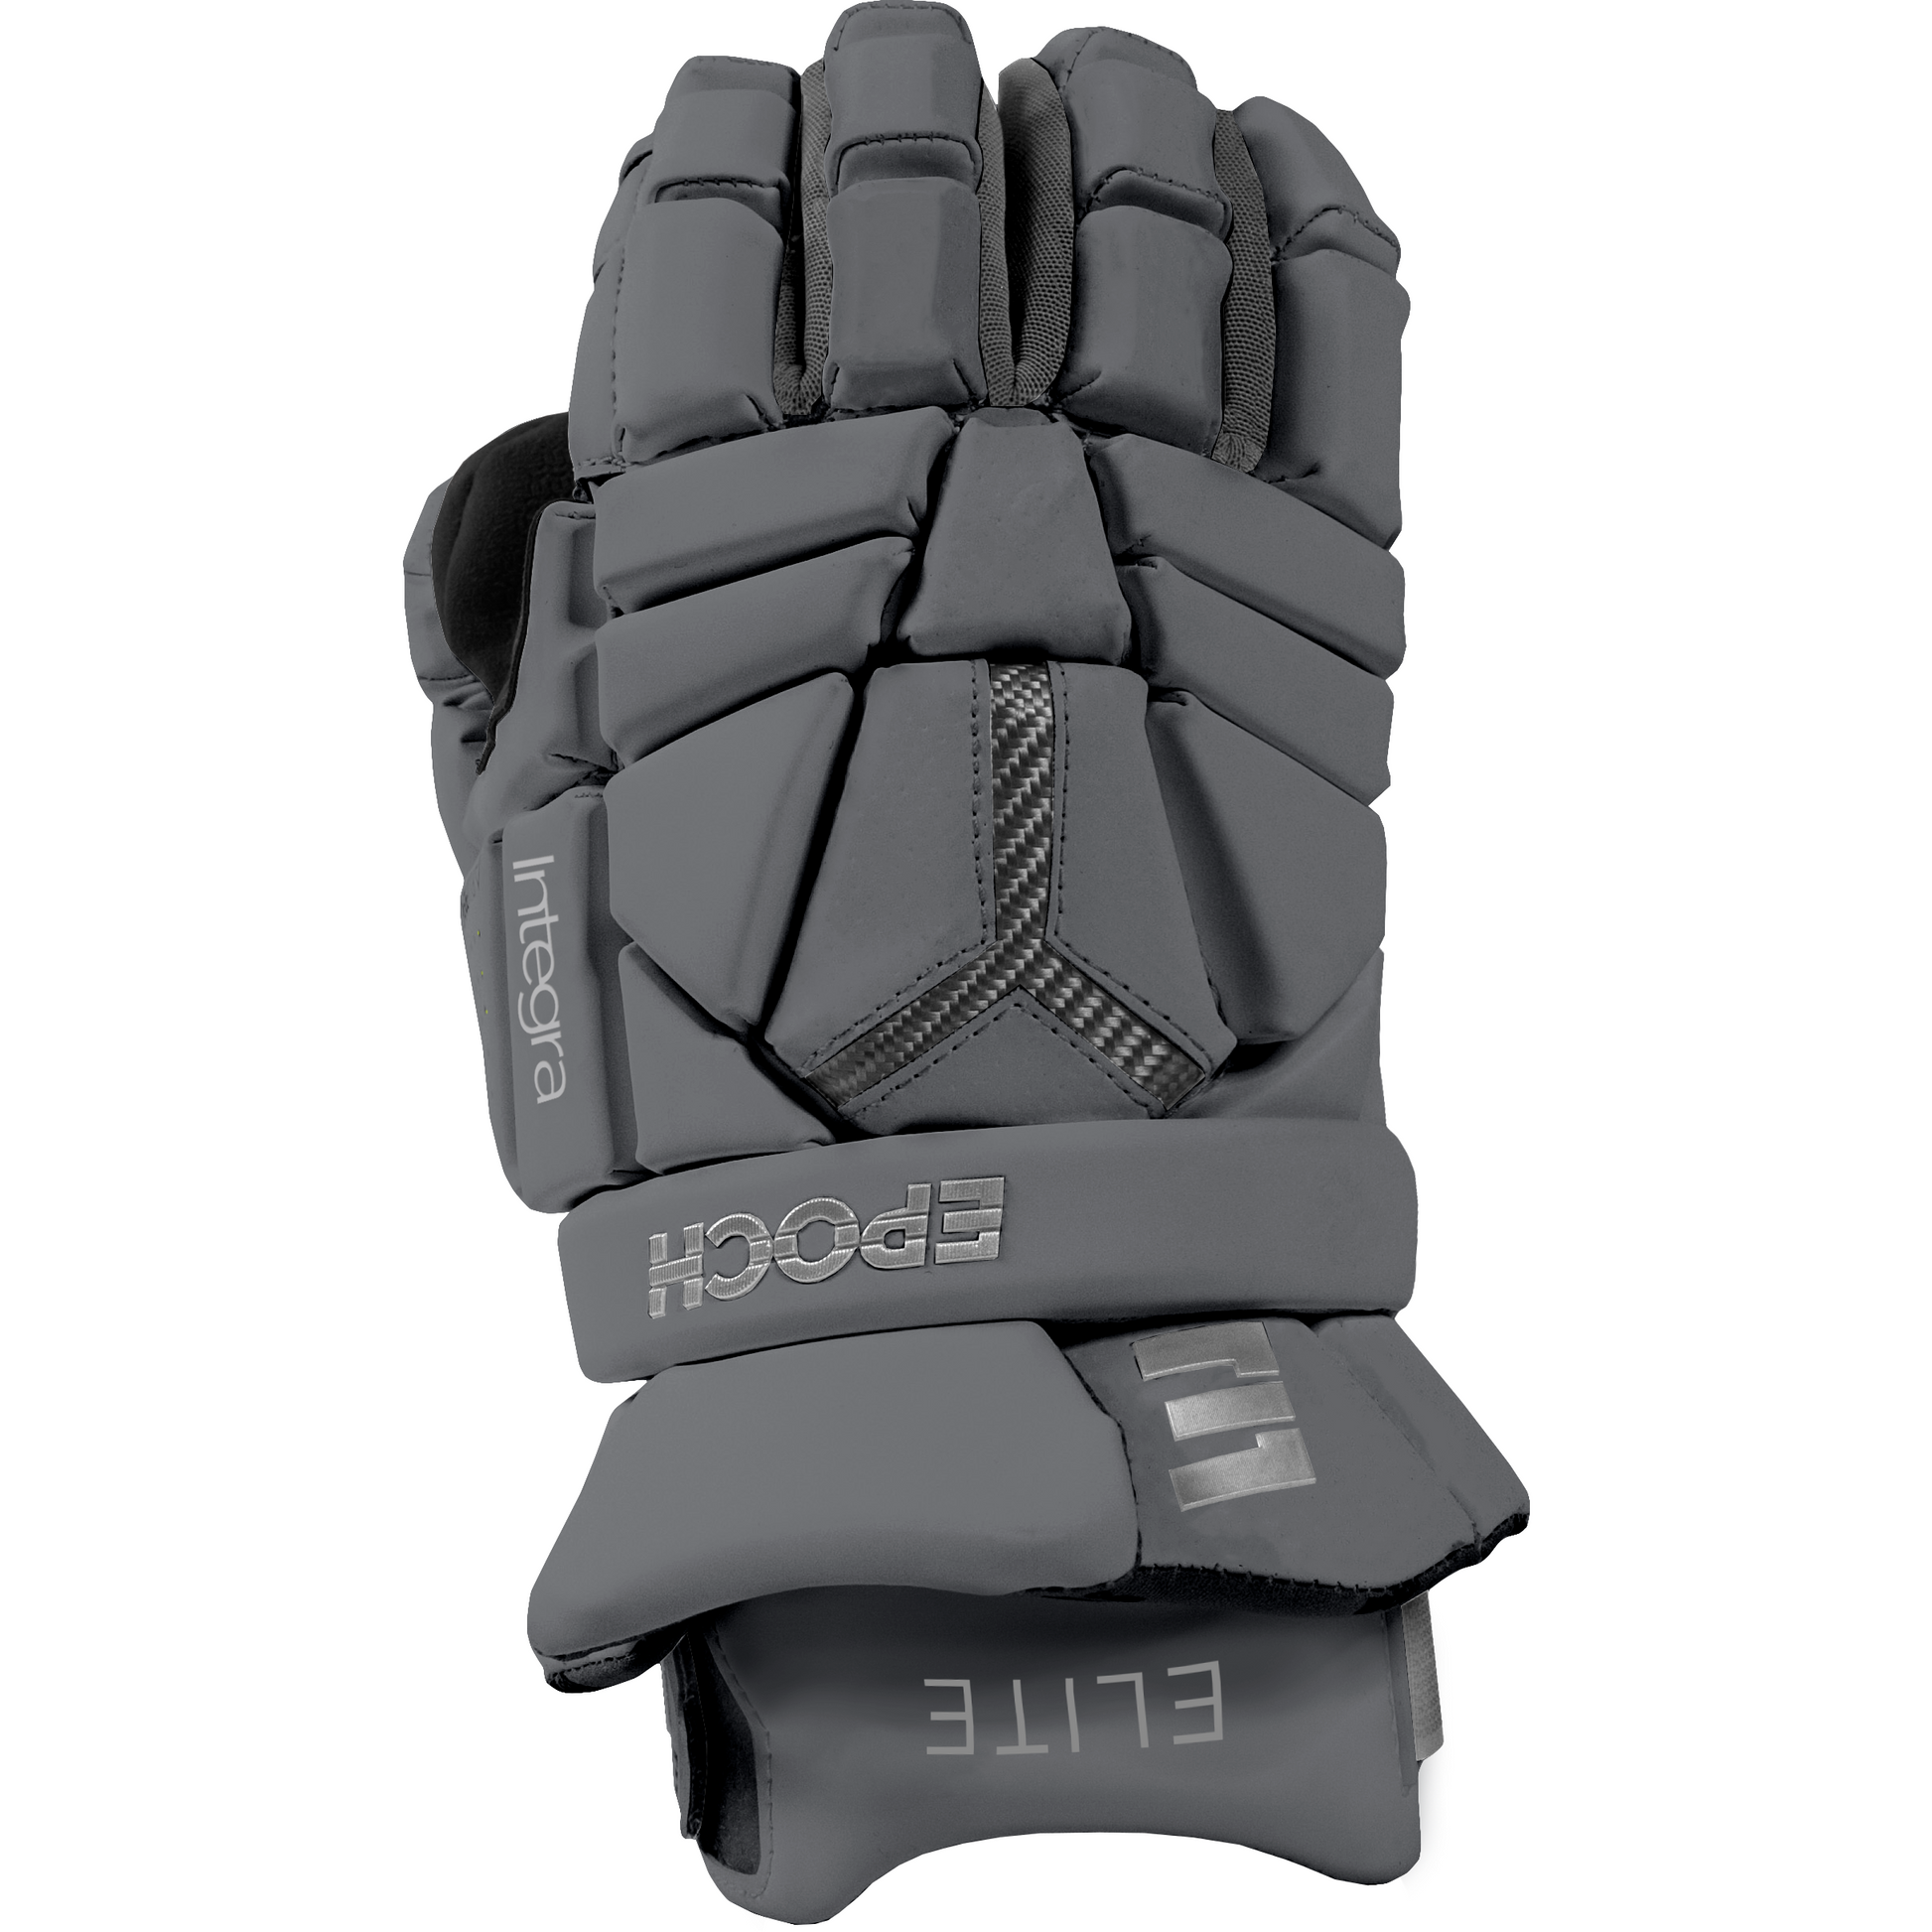 Epoch Integra Elite Lacrosse Gloves Grey